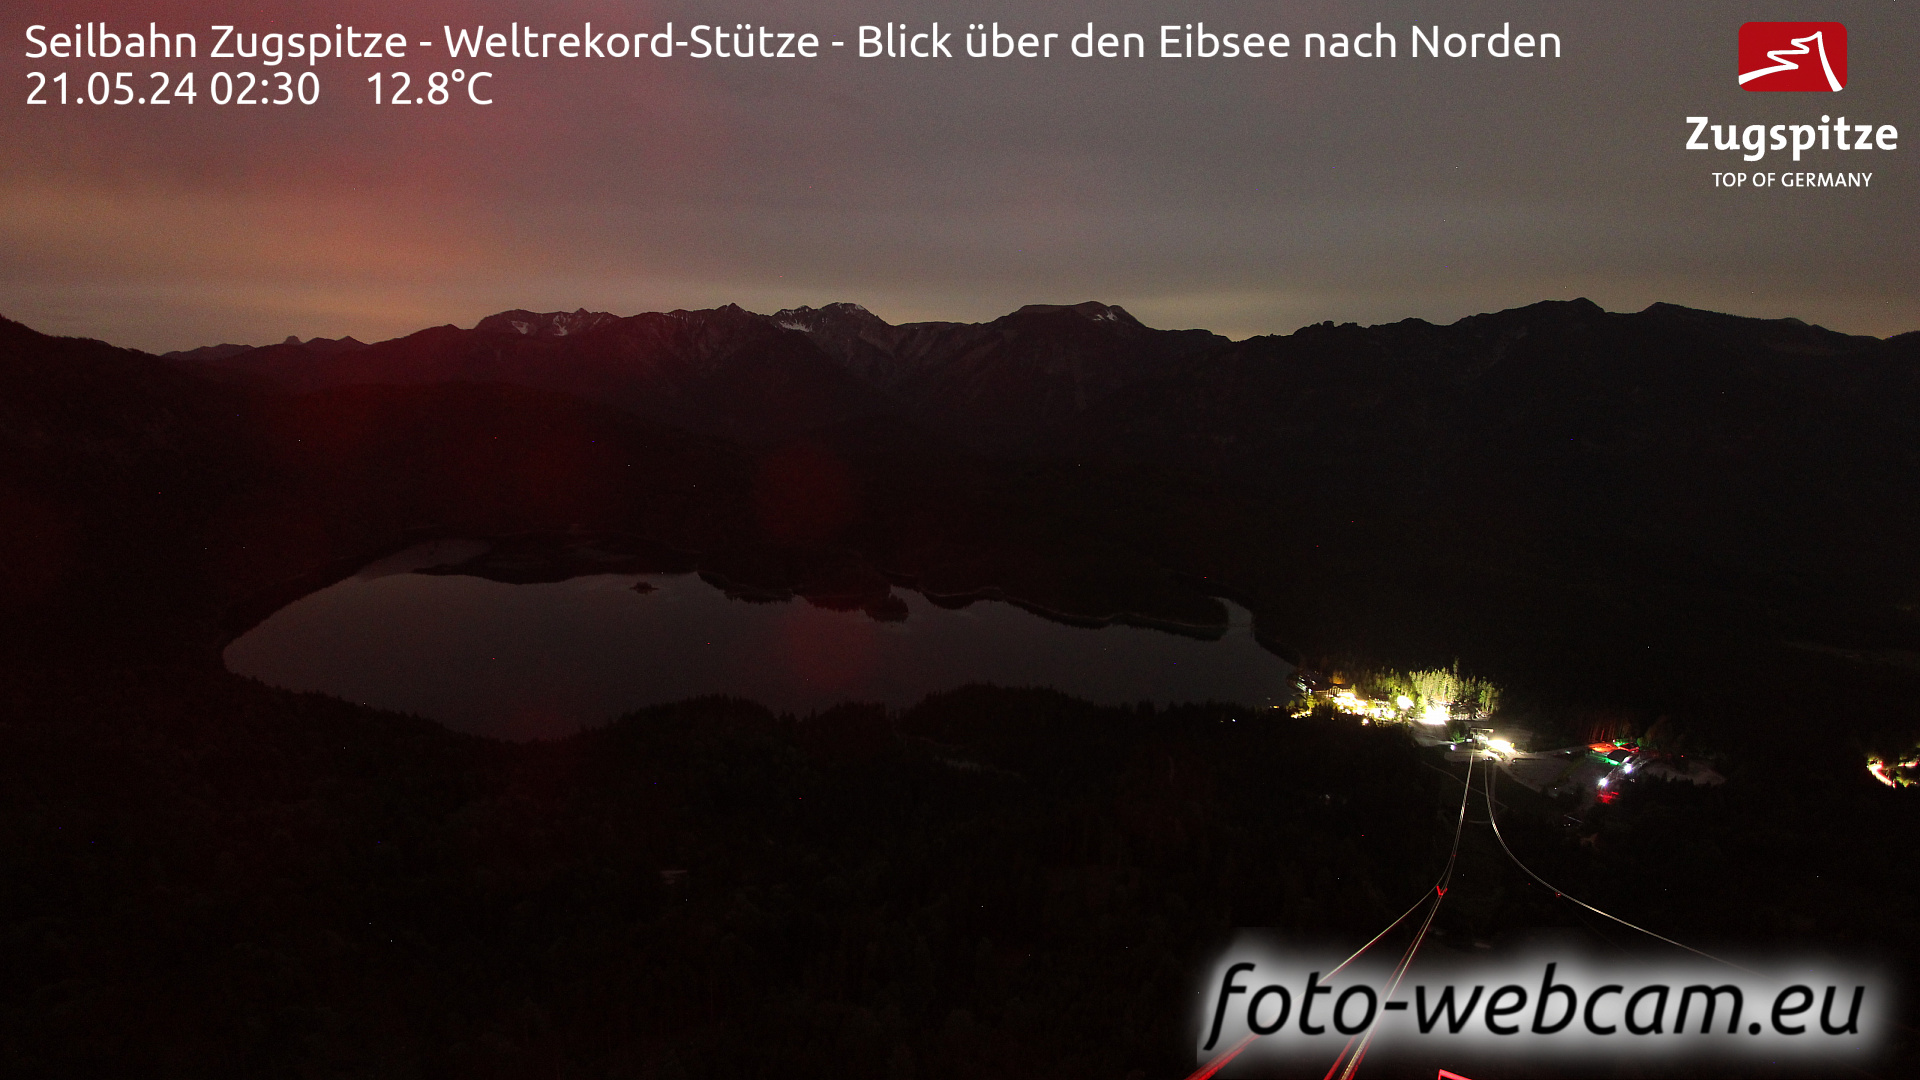 Zugspitze Ma. 02:49